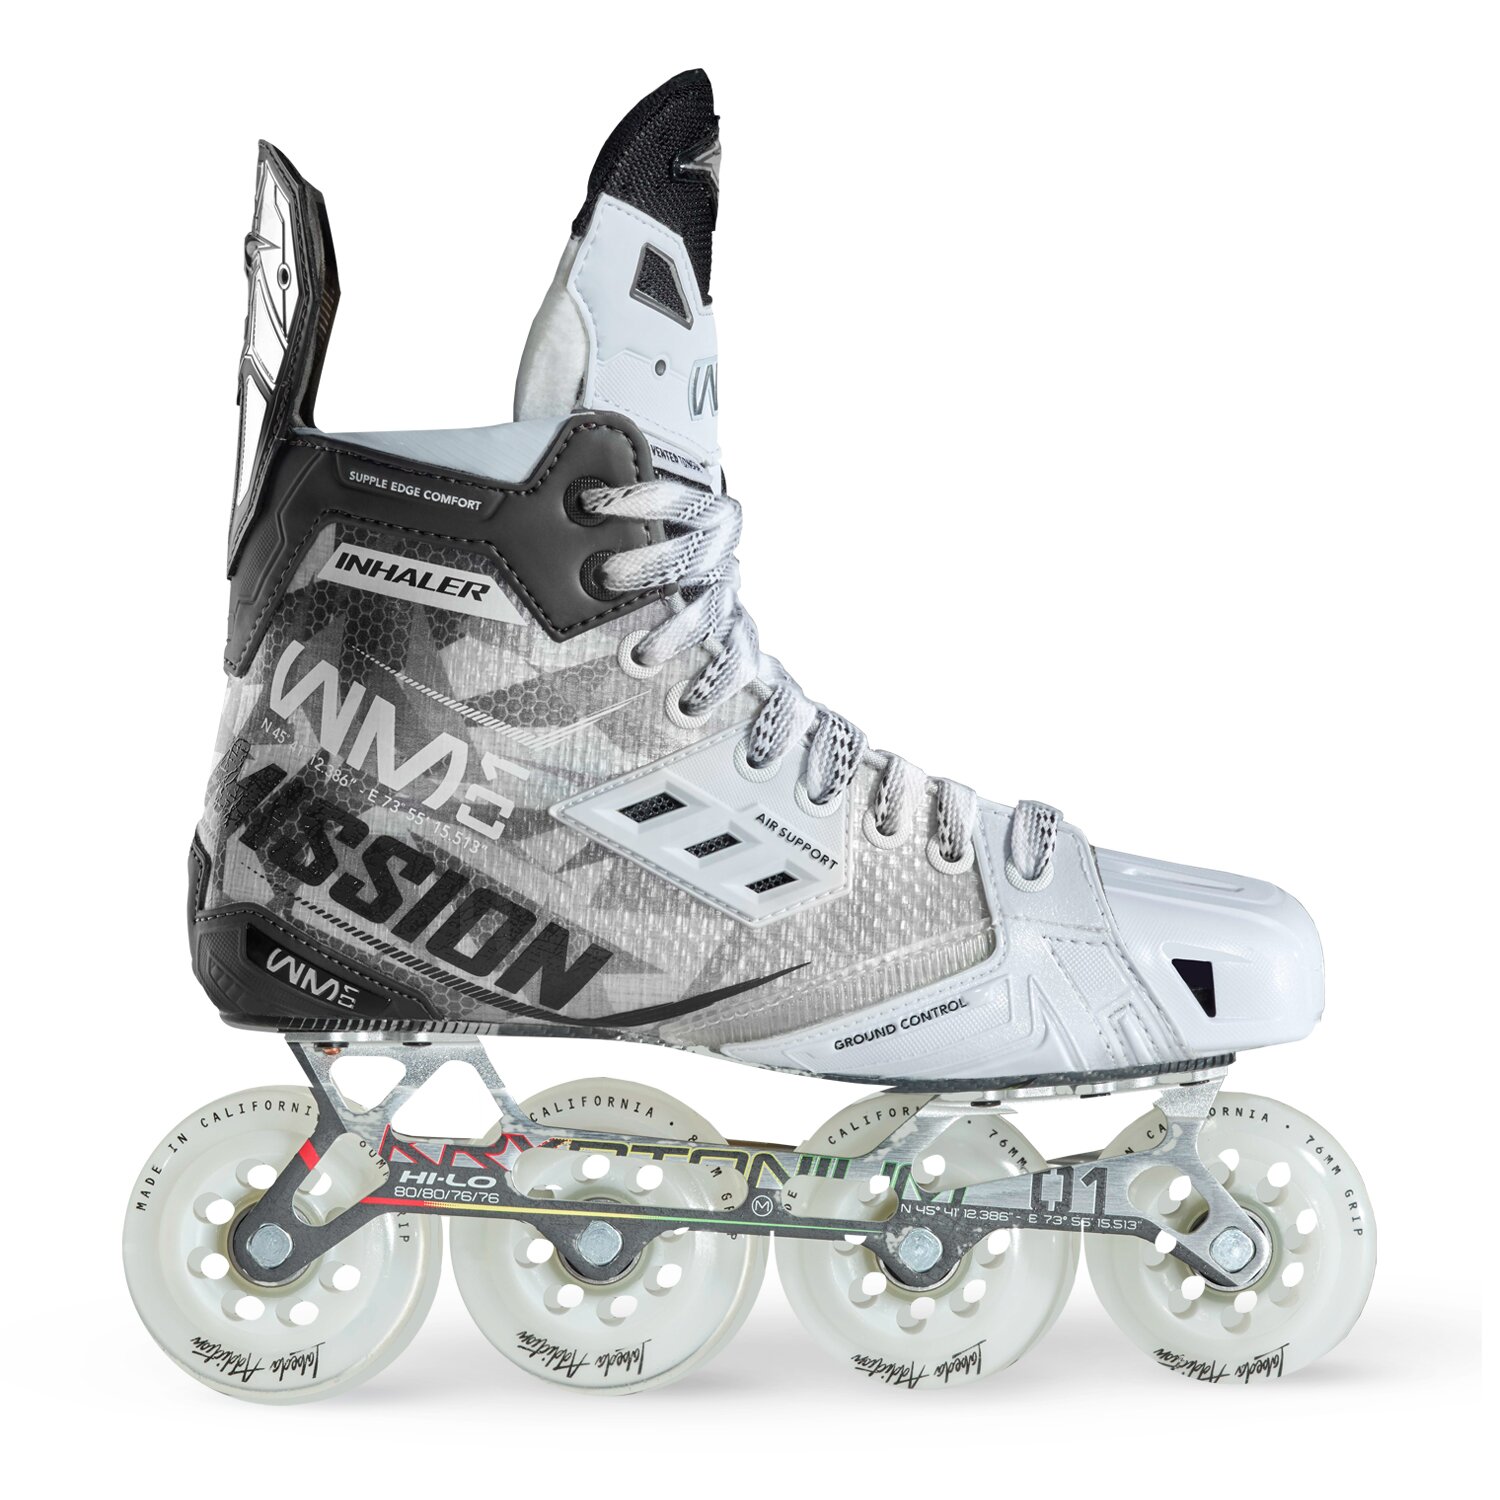 mission-inlinehockey-skate-inhaler-wm01-senior.jpg